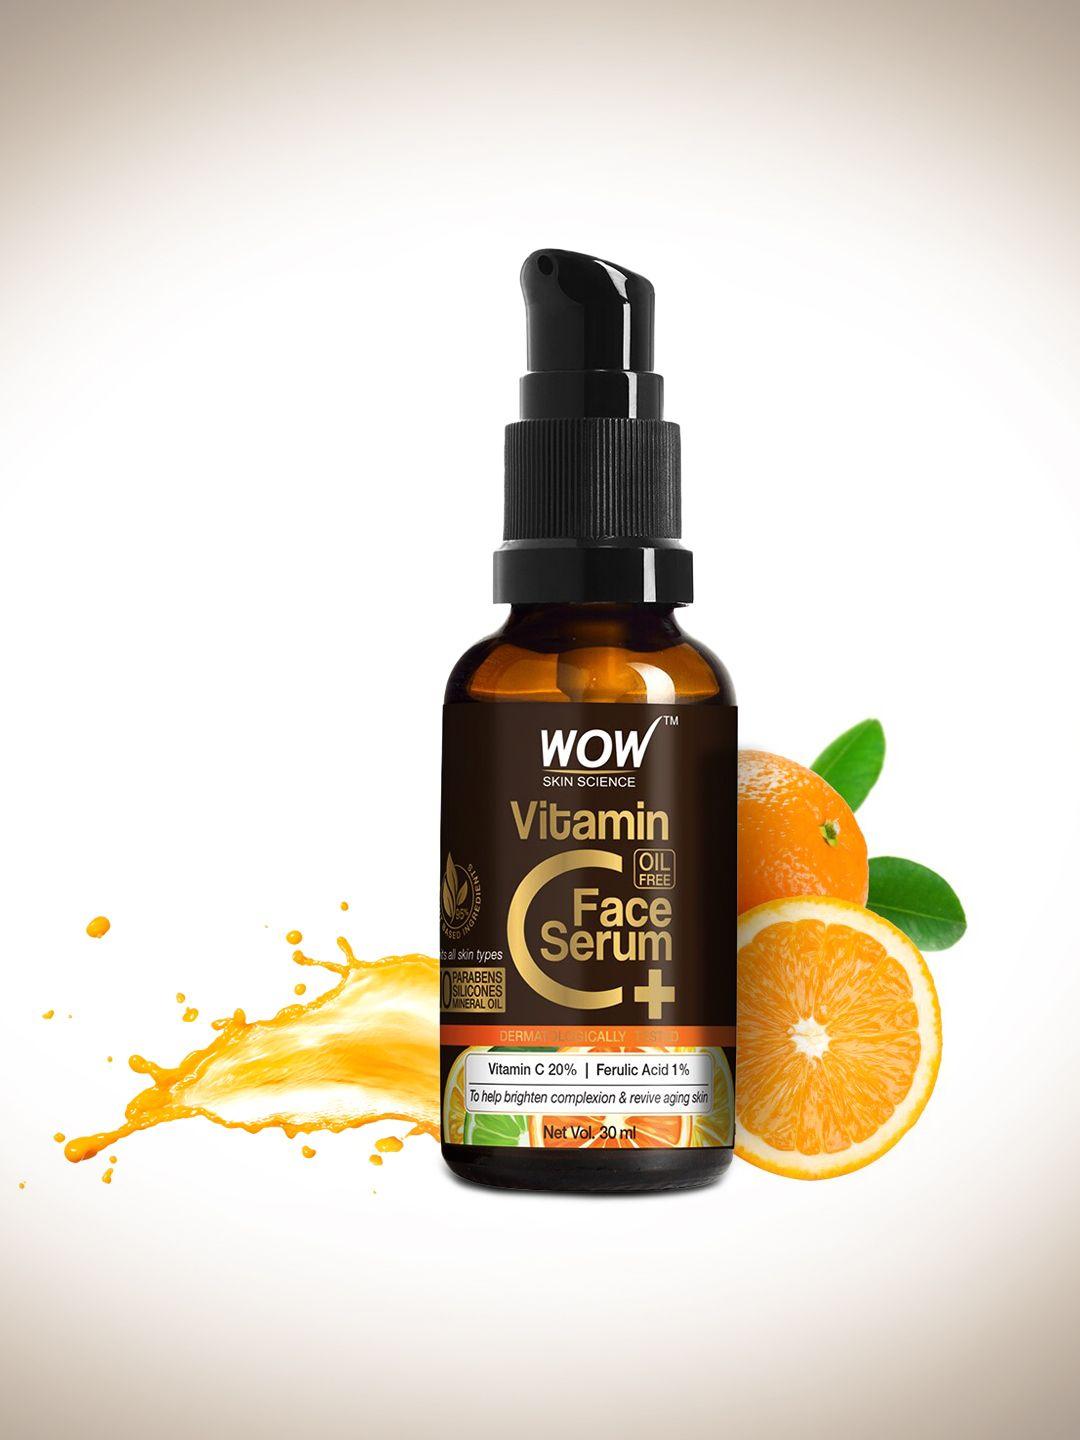 wow skin science vitamin c+ face serum for brightening, anti-aging - 30ml